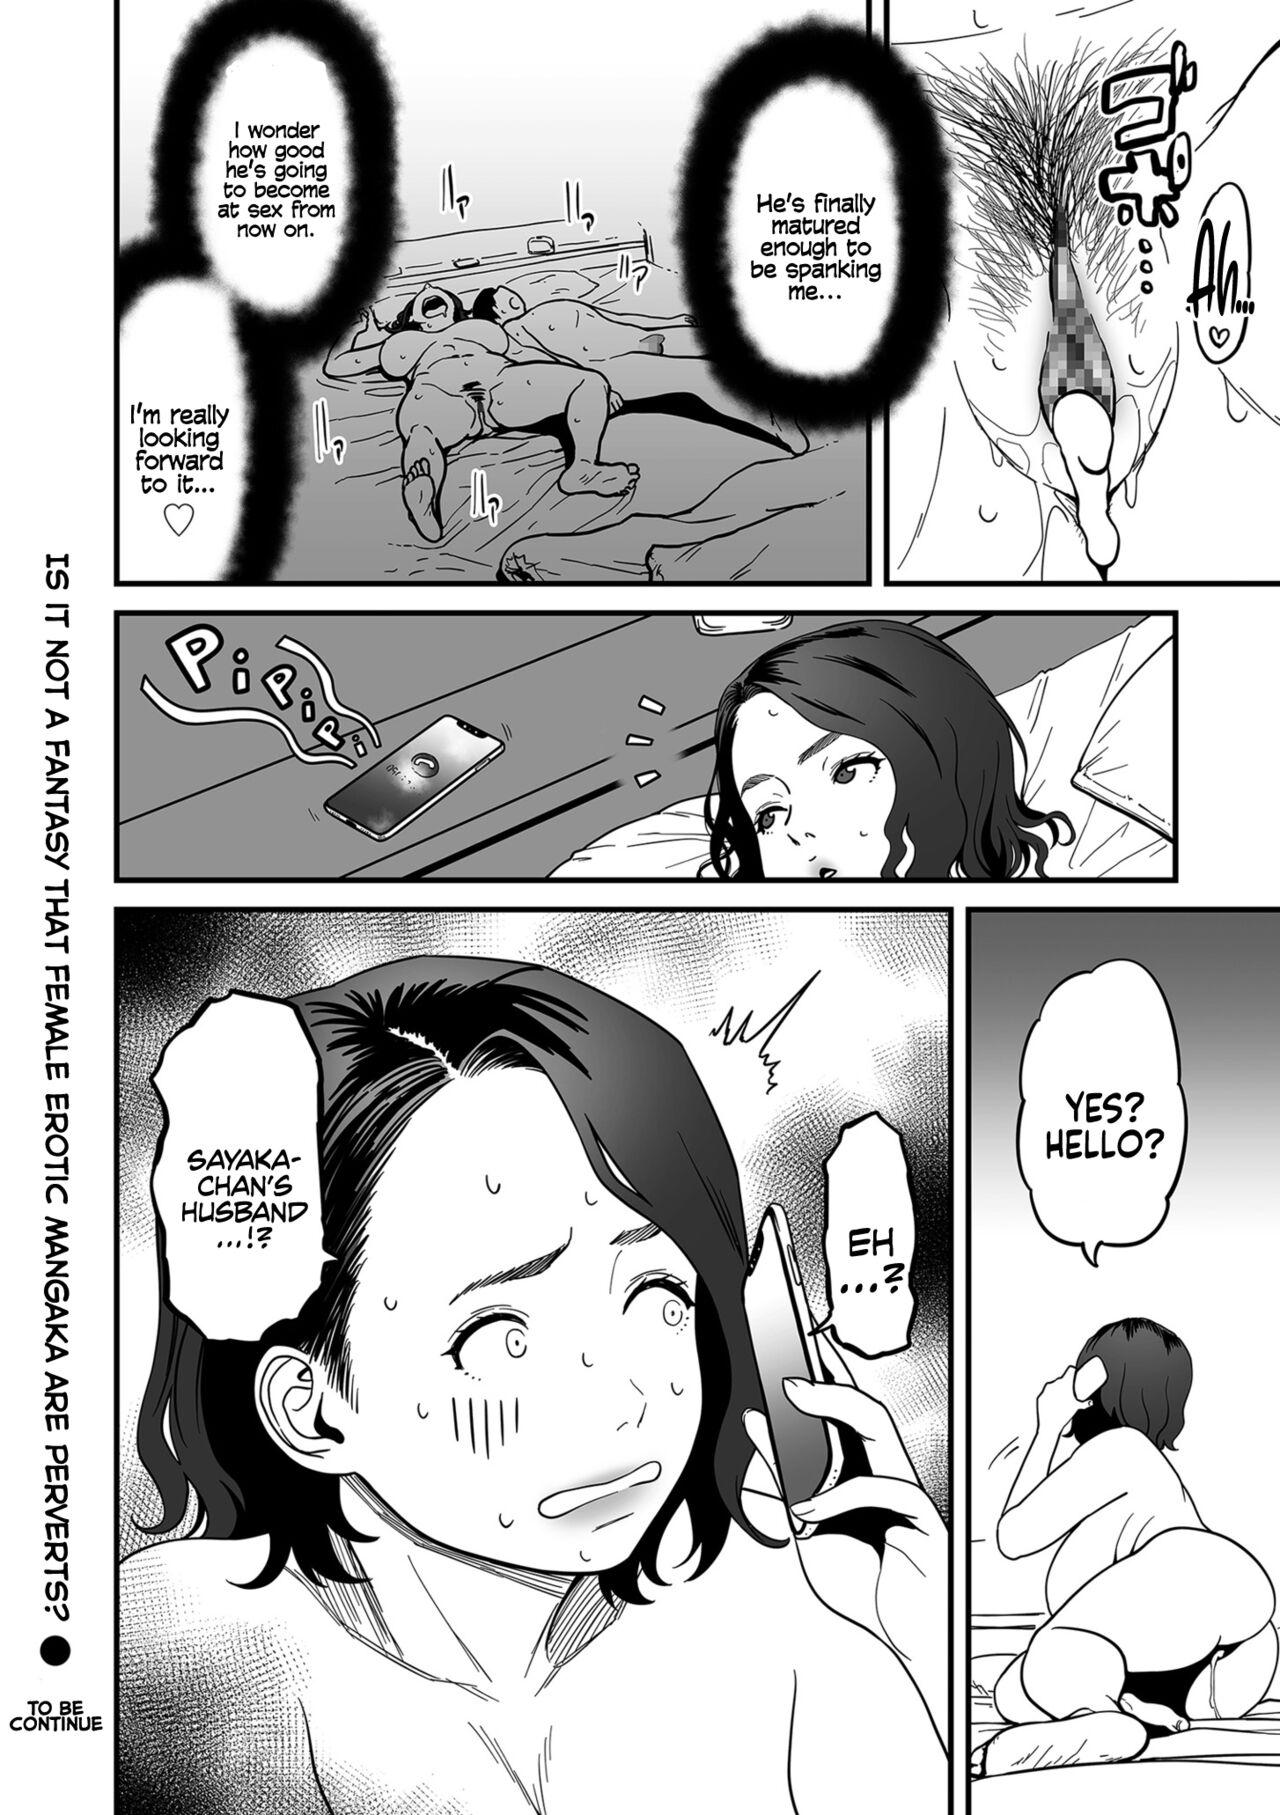 [Tsuzura Kuzukago] Onna Eromangaka ga Inran da nante Gensou ja nai? 1-7 | Is It Not a Fantasy That The Female Erotic Mangaka Is a Pervert? 1-7 [English] [Coffedrug] 149